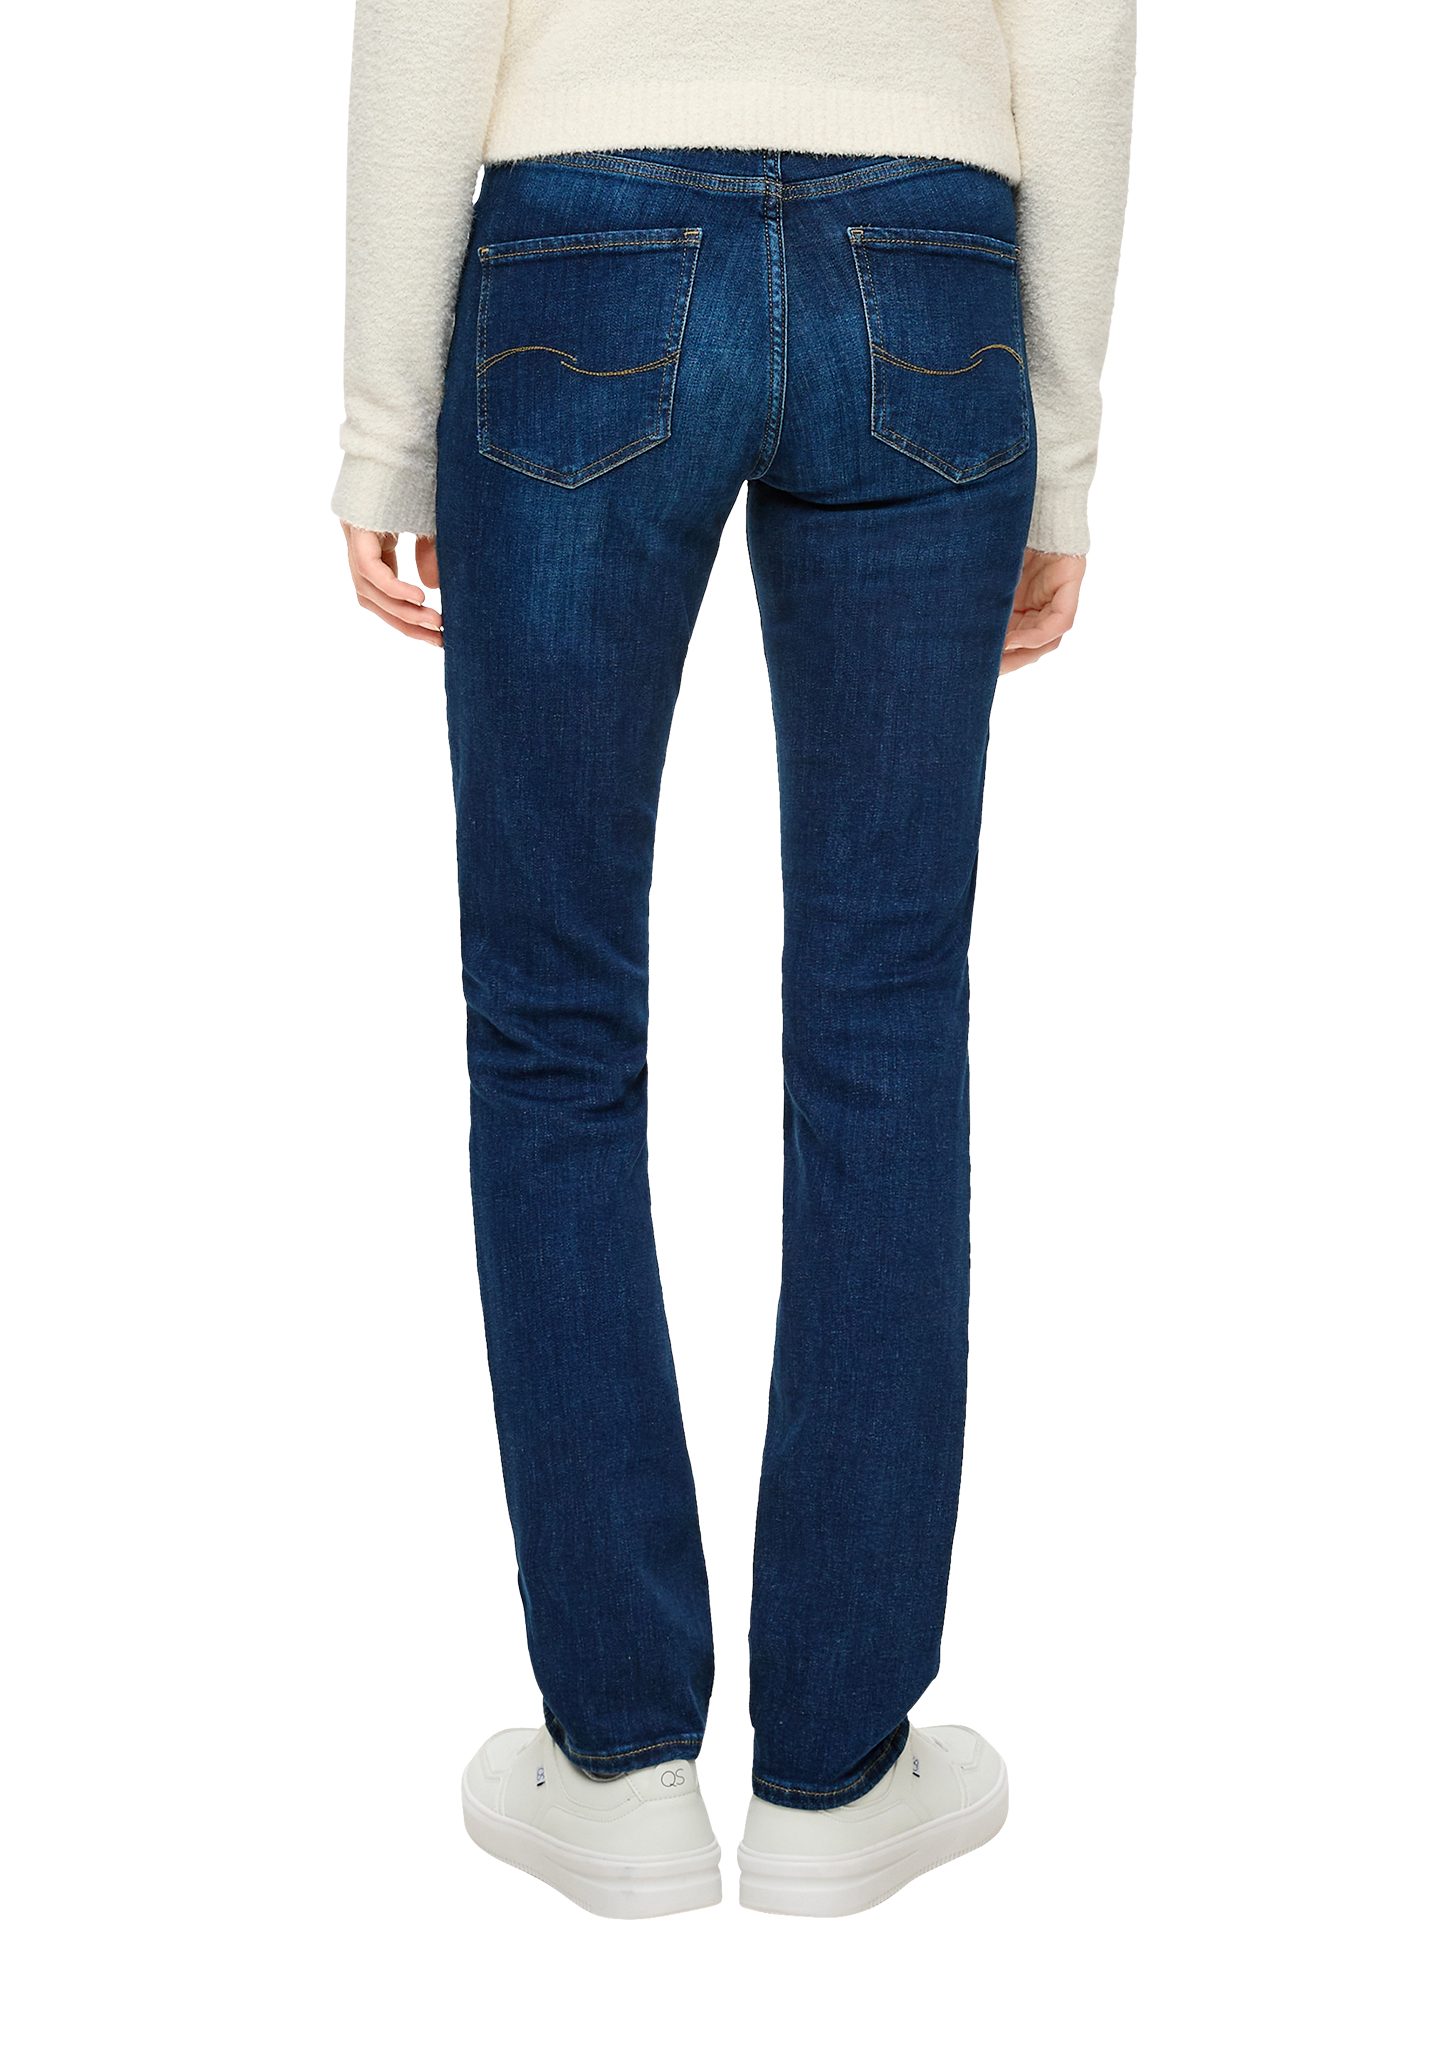 Jeans Kontrastnähte, QS Waschung, mit Destroyes, dunkelblau Leg Catie: Straight Stoffhose Label-Patch